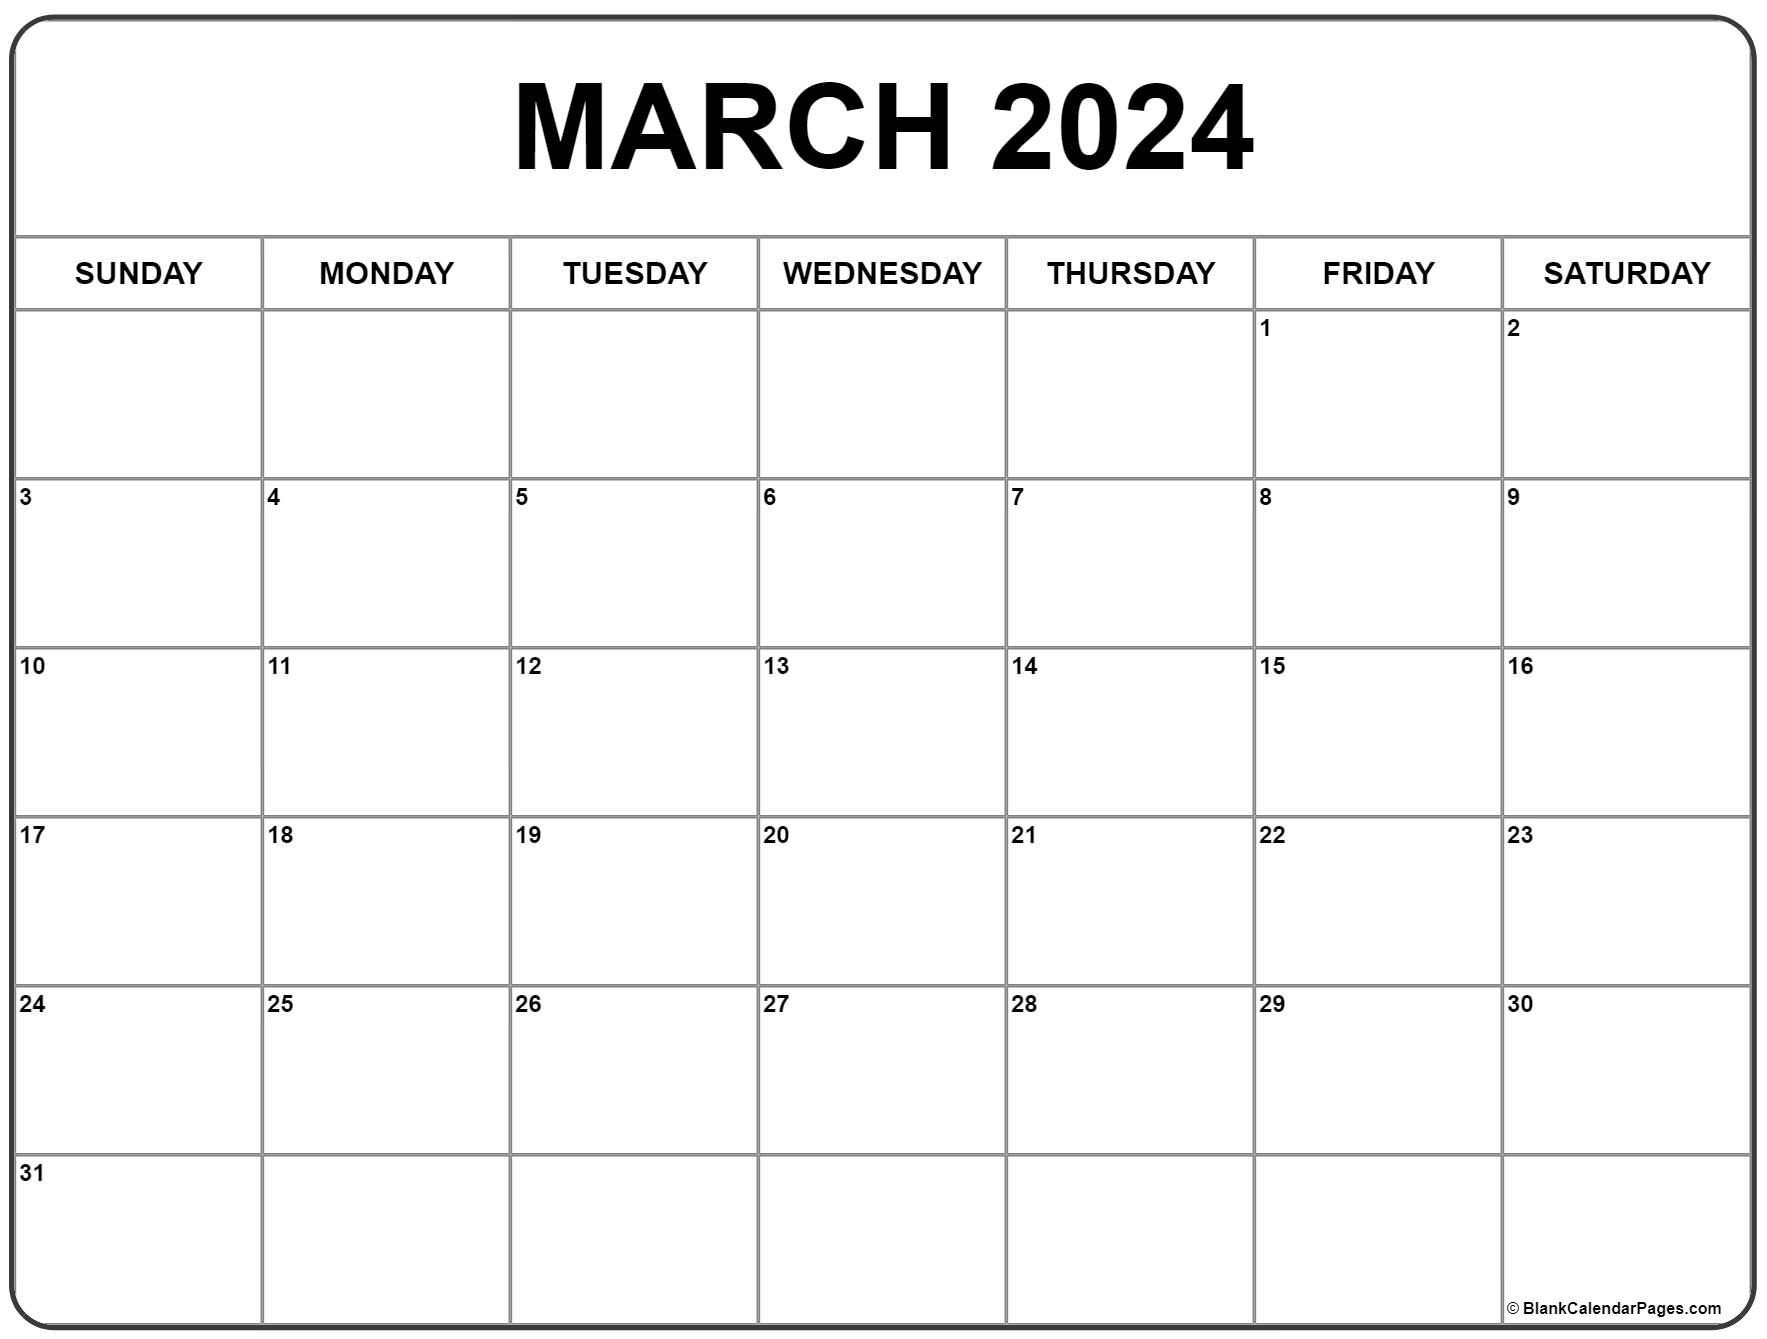 March 2024 Calendar | Free Printable Calendar for Printable Calendar March 2024 Free